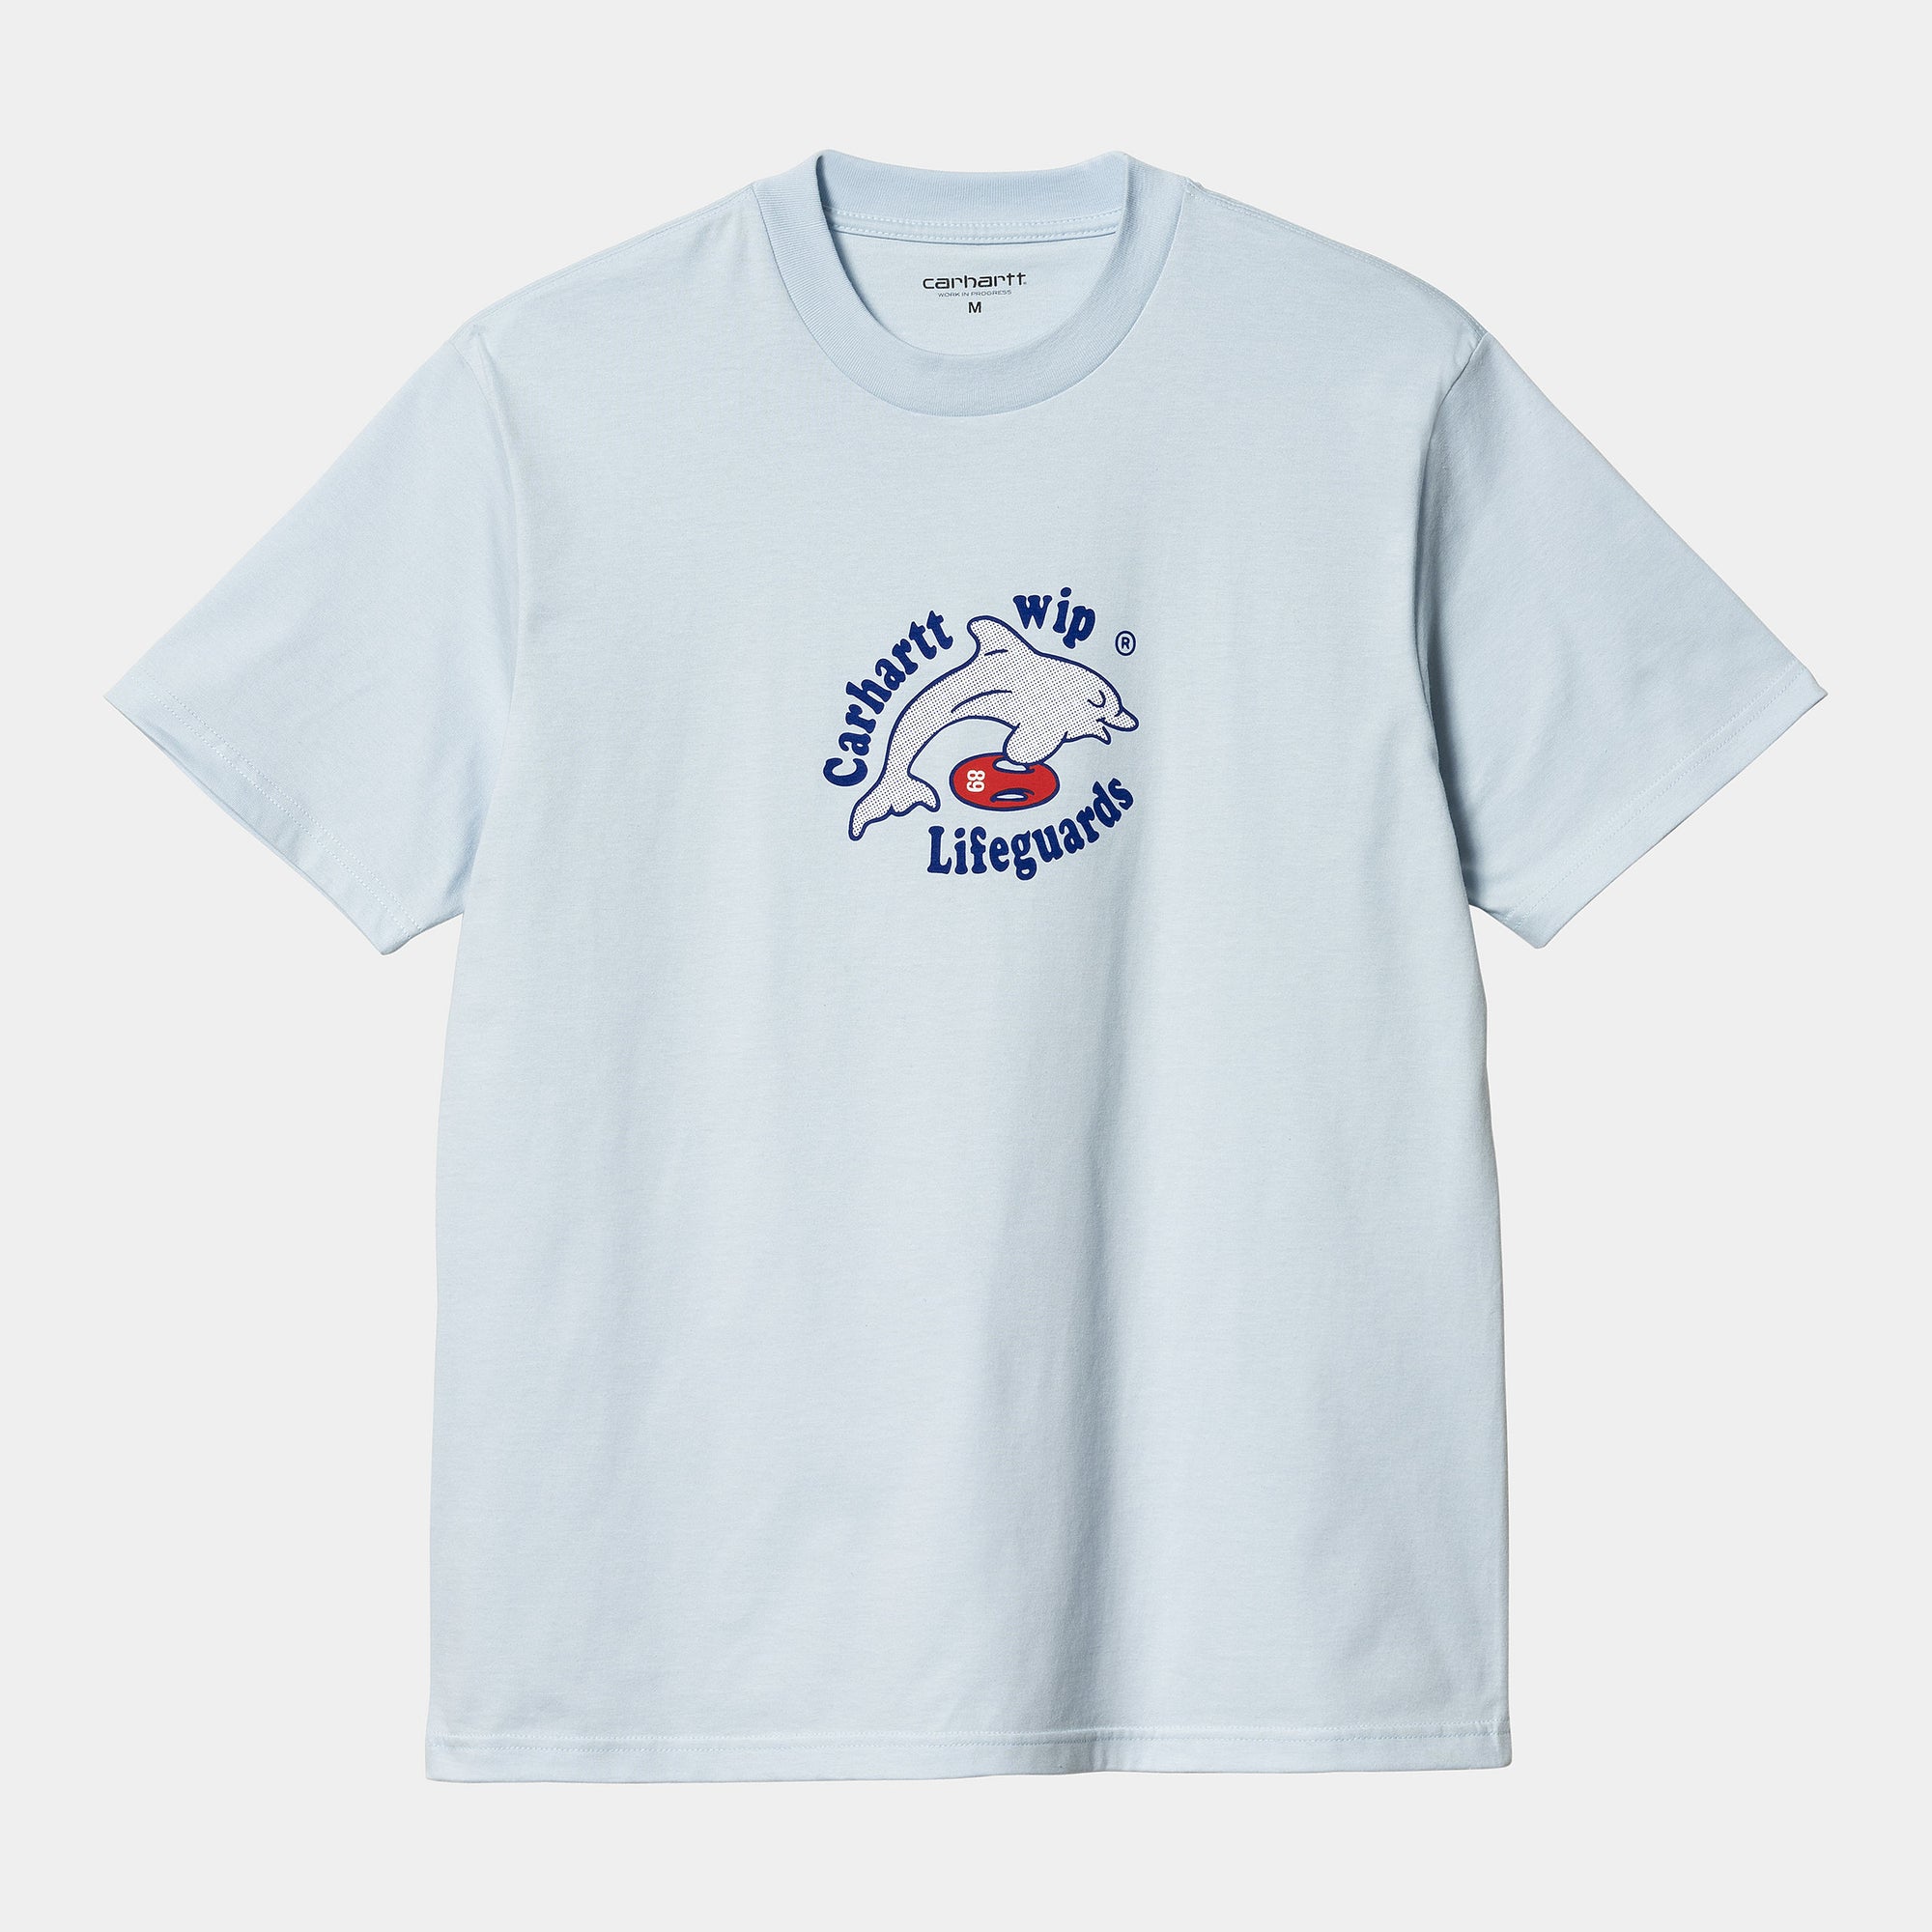 Carhartt WIP - Lifeguard T-Shirt - Icarus